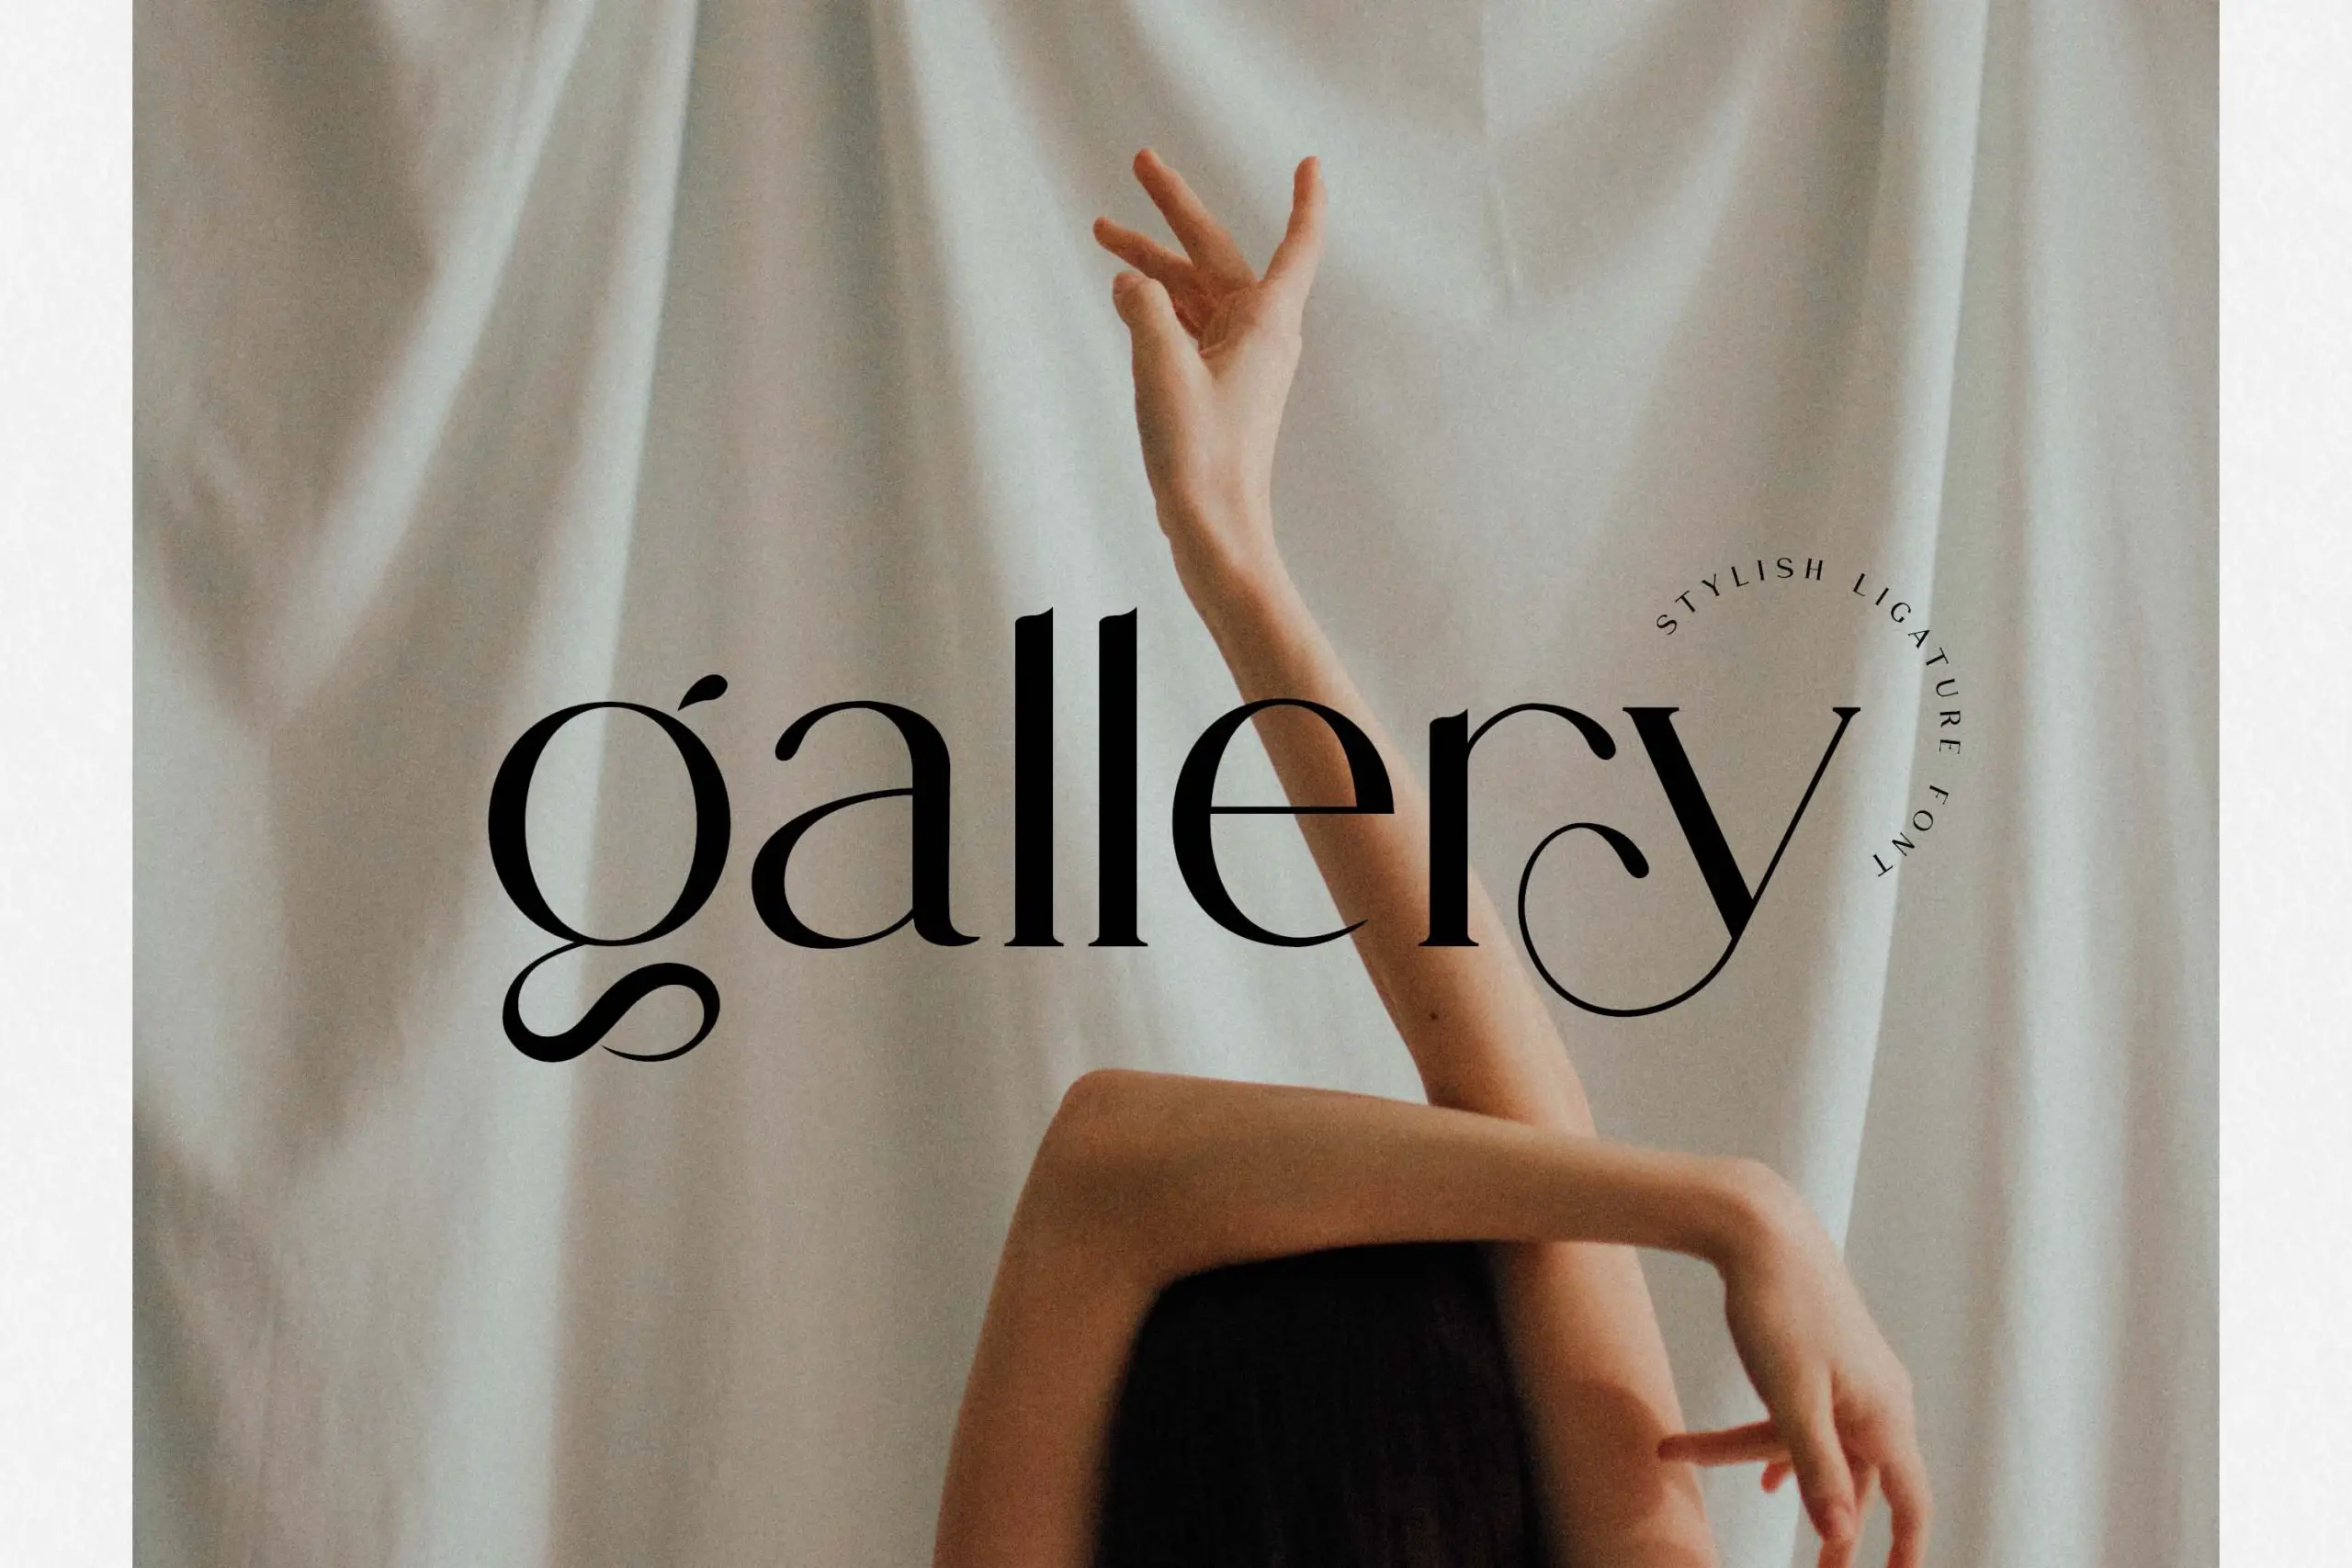 Gallery - 